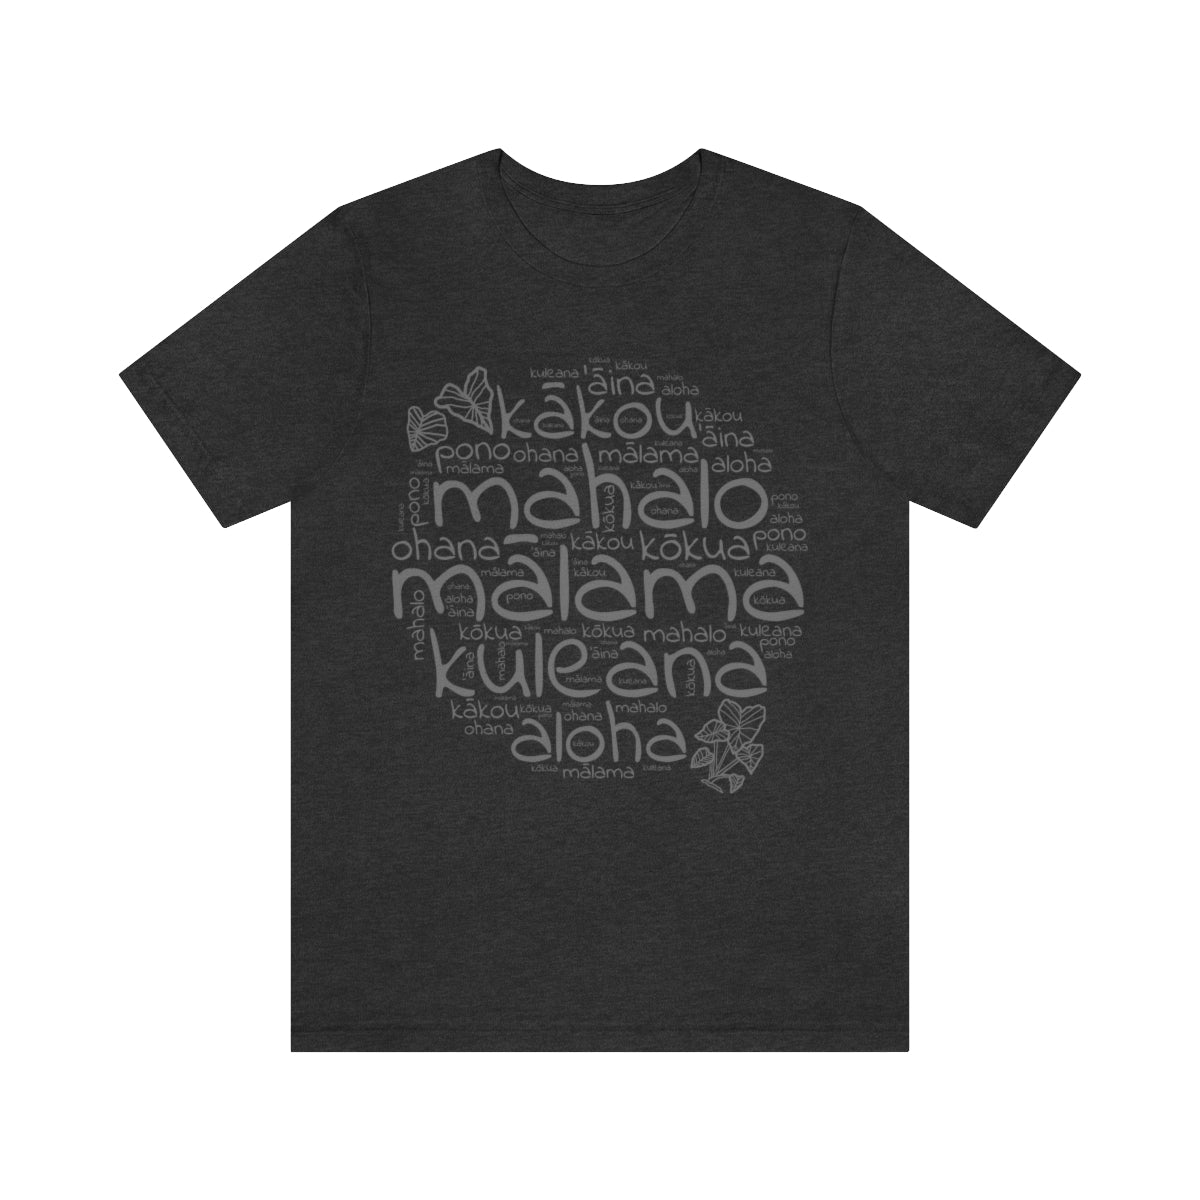 Hawaiian 'Olelo Hawai'i Kuleana with Kalo Plant T-Shirt, Unisex Jersey Short Sleeve Tee